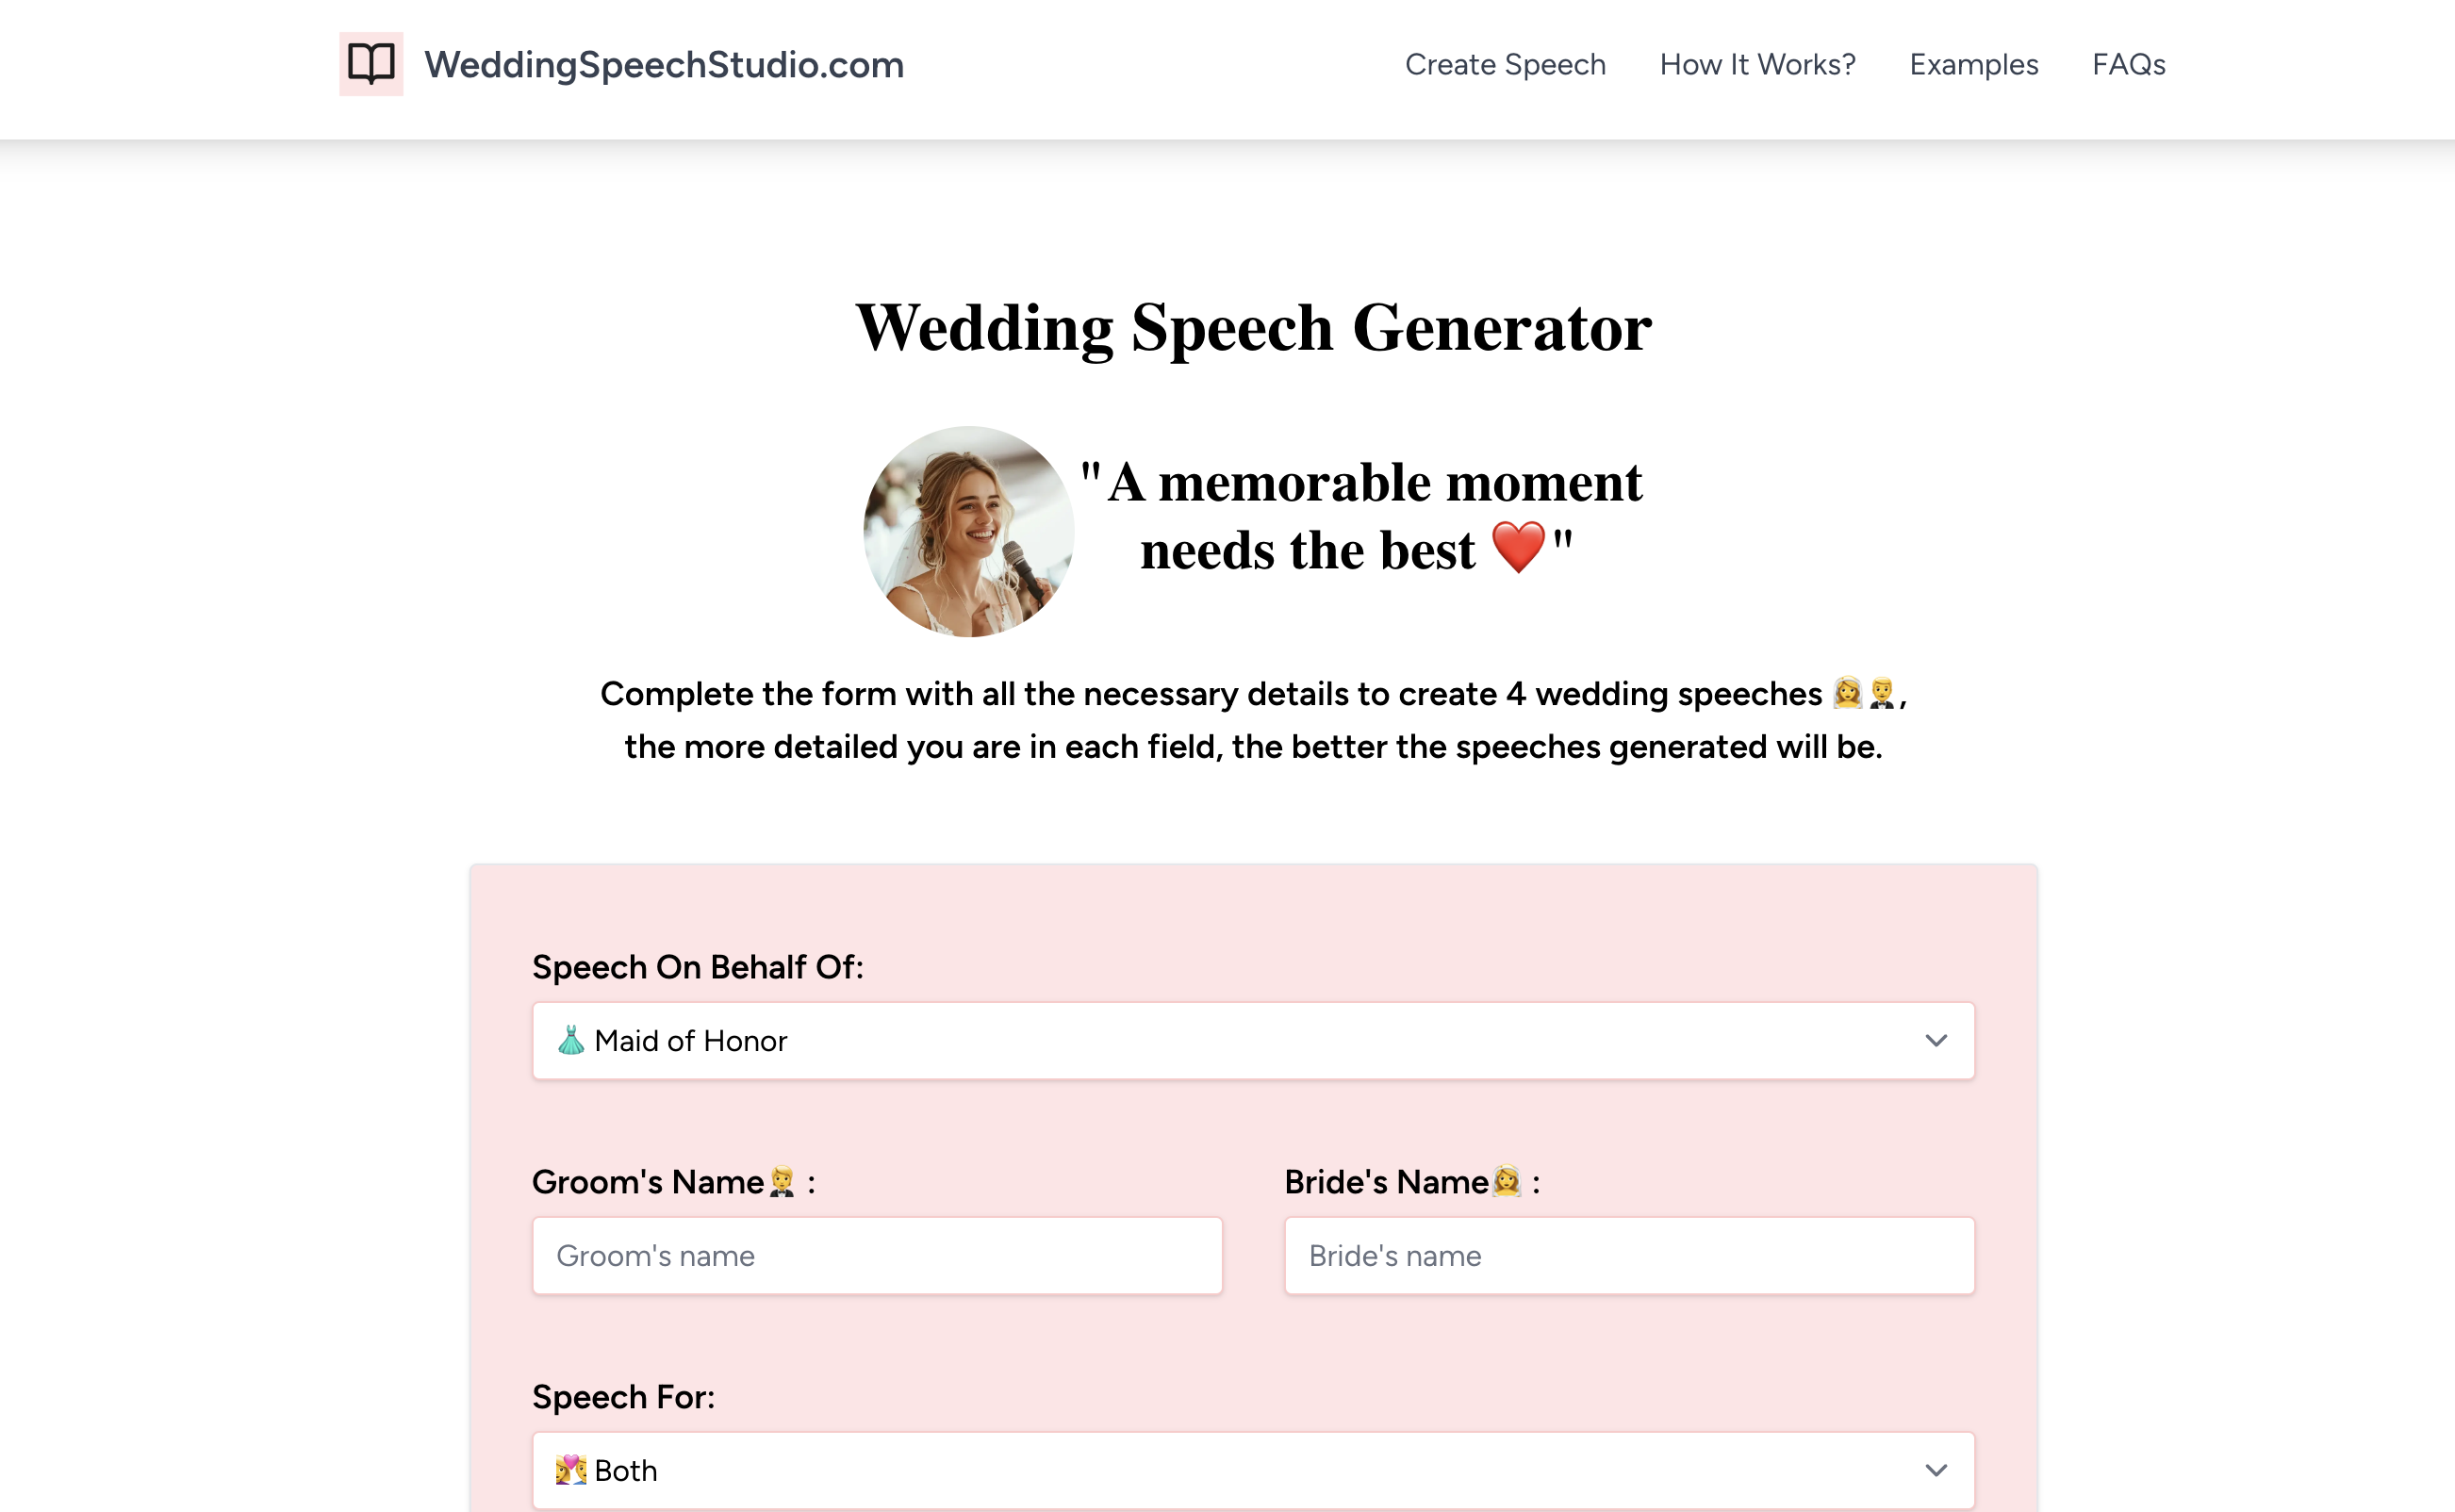 Wedding Speech Studio